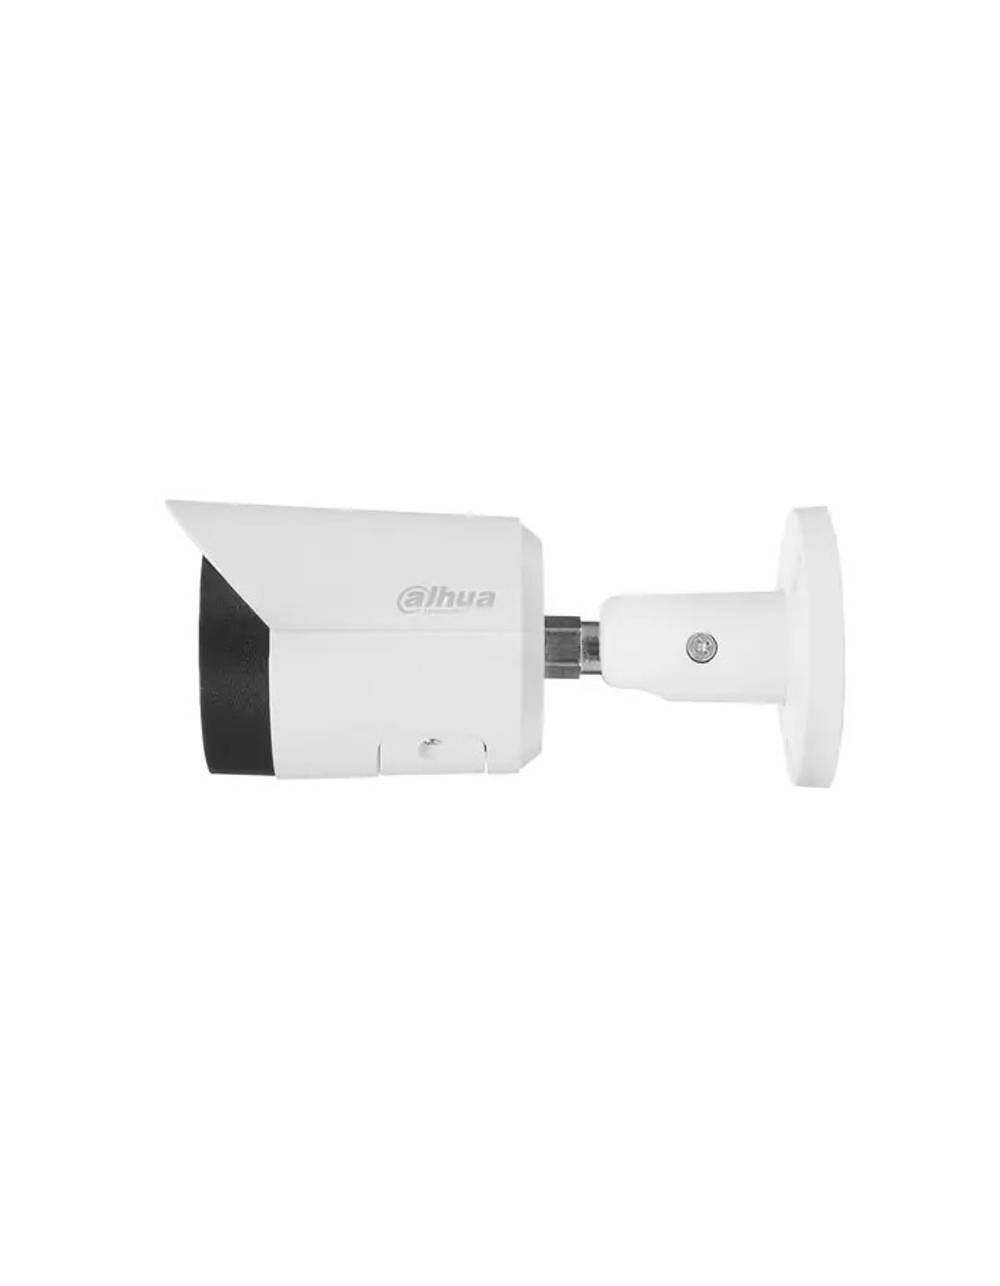 DAHUA DH-IPC-HFW2230SP-S-0280B-S2 Уличная цилиндрическая IP-видеокамера 2Мп, 1/2.8” CMOS, объектив 2.8мм, видеоаналитика, ИК-подсветка до 30м